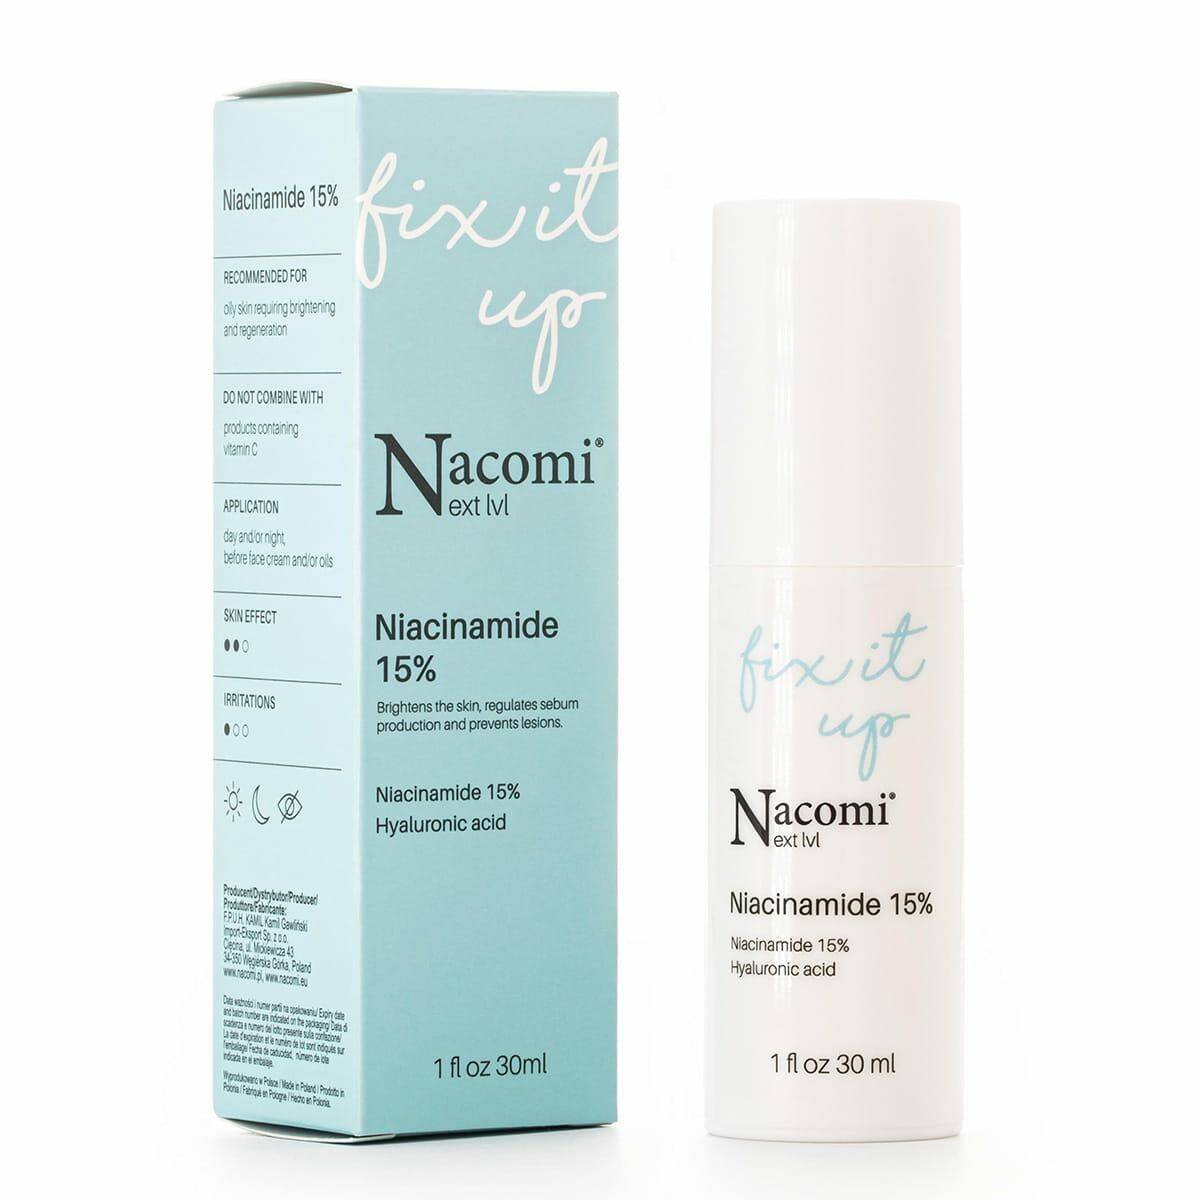 Nacomi next lvl serum Niacynamide15%30ml